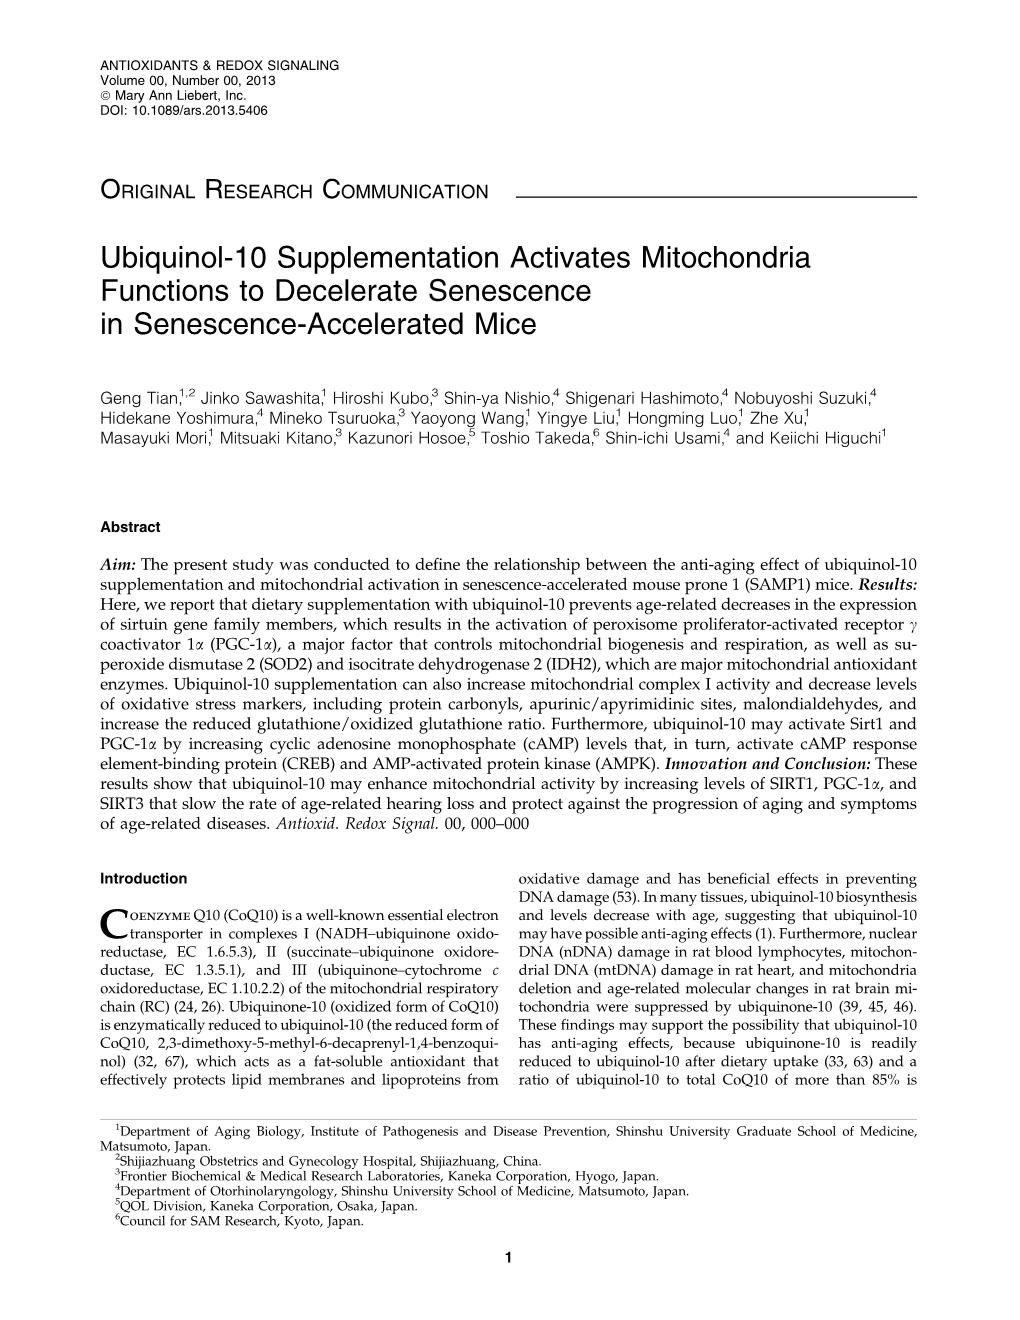 Ubiquinol-10 Supplementation Activates Mitochondria Functions to Decelerate Senescence in Senescence-Accelerated Mice